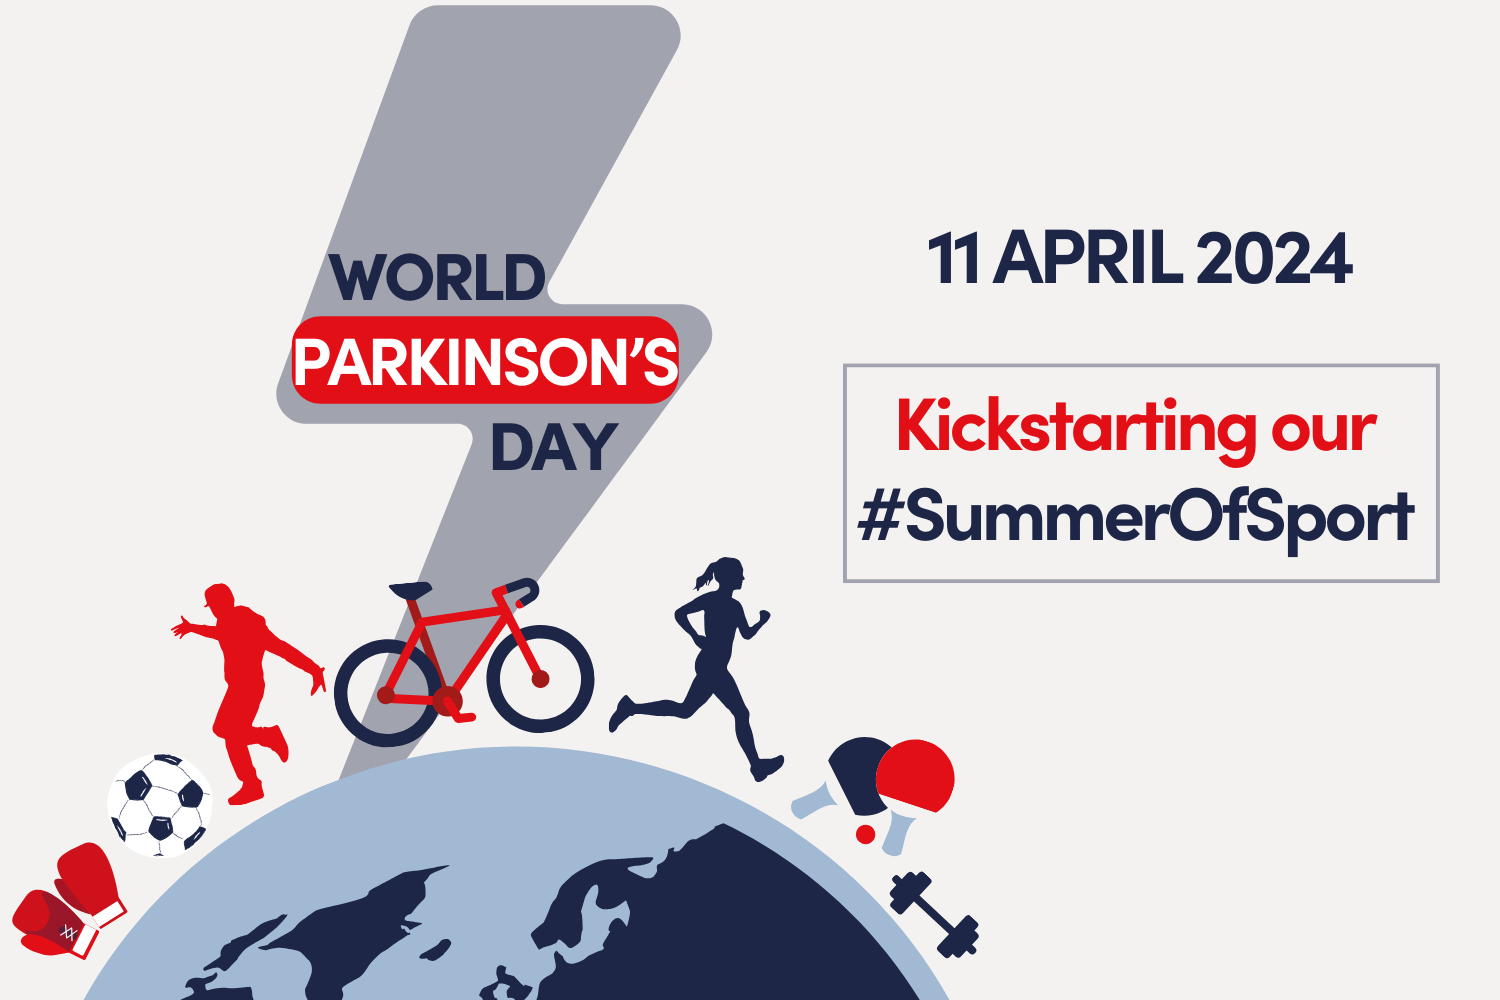 World Parkinson's Day 11 April 2024